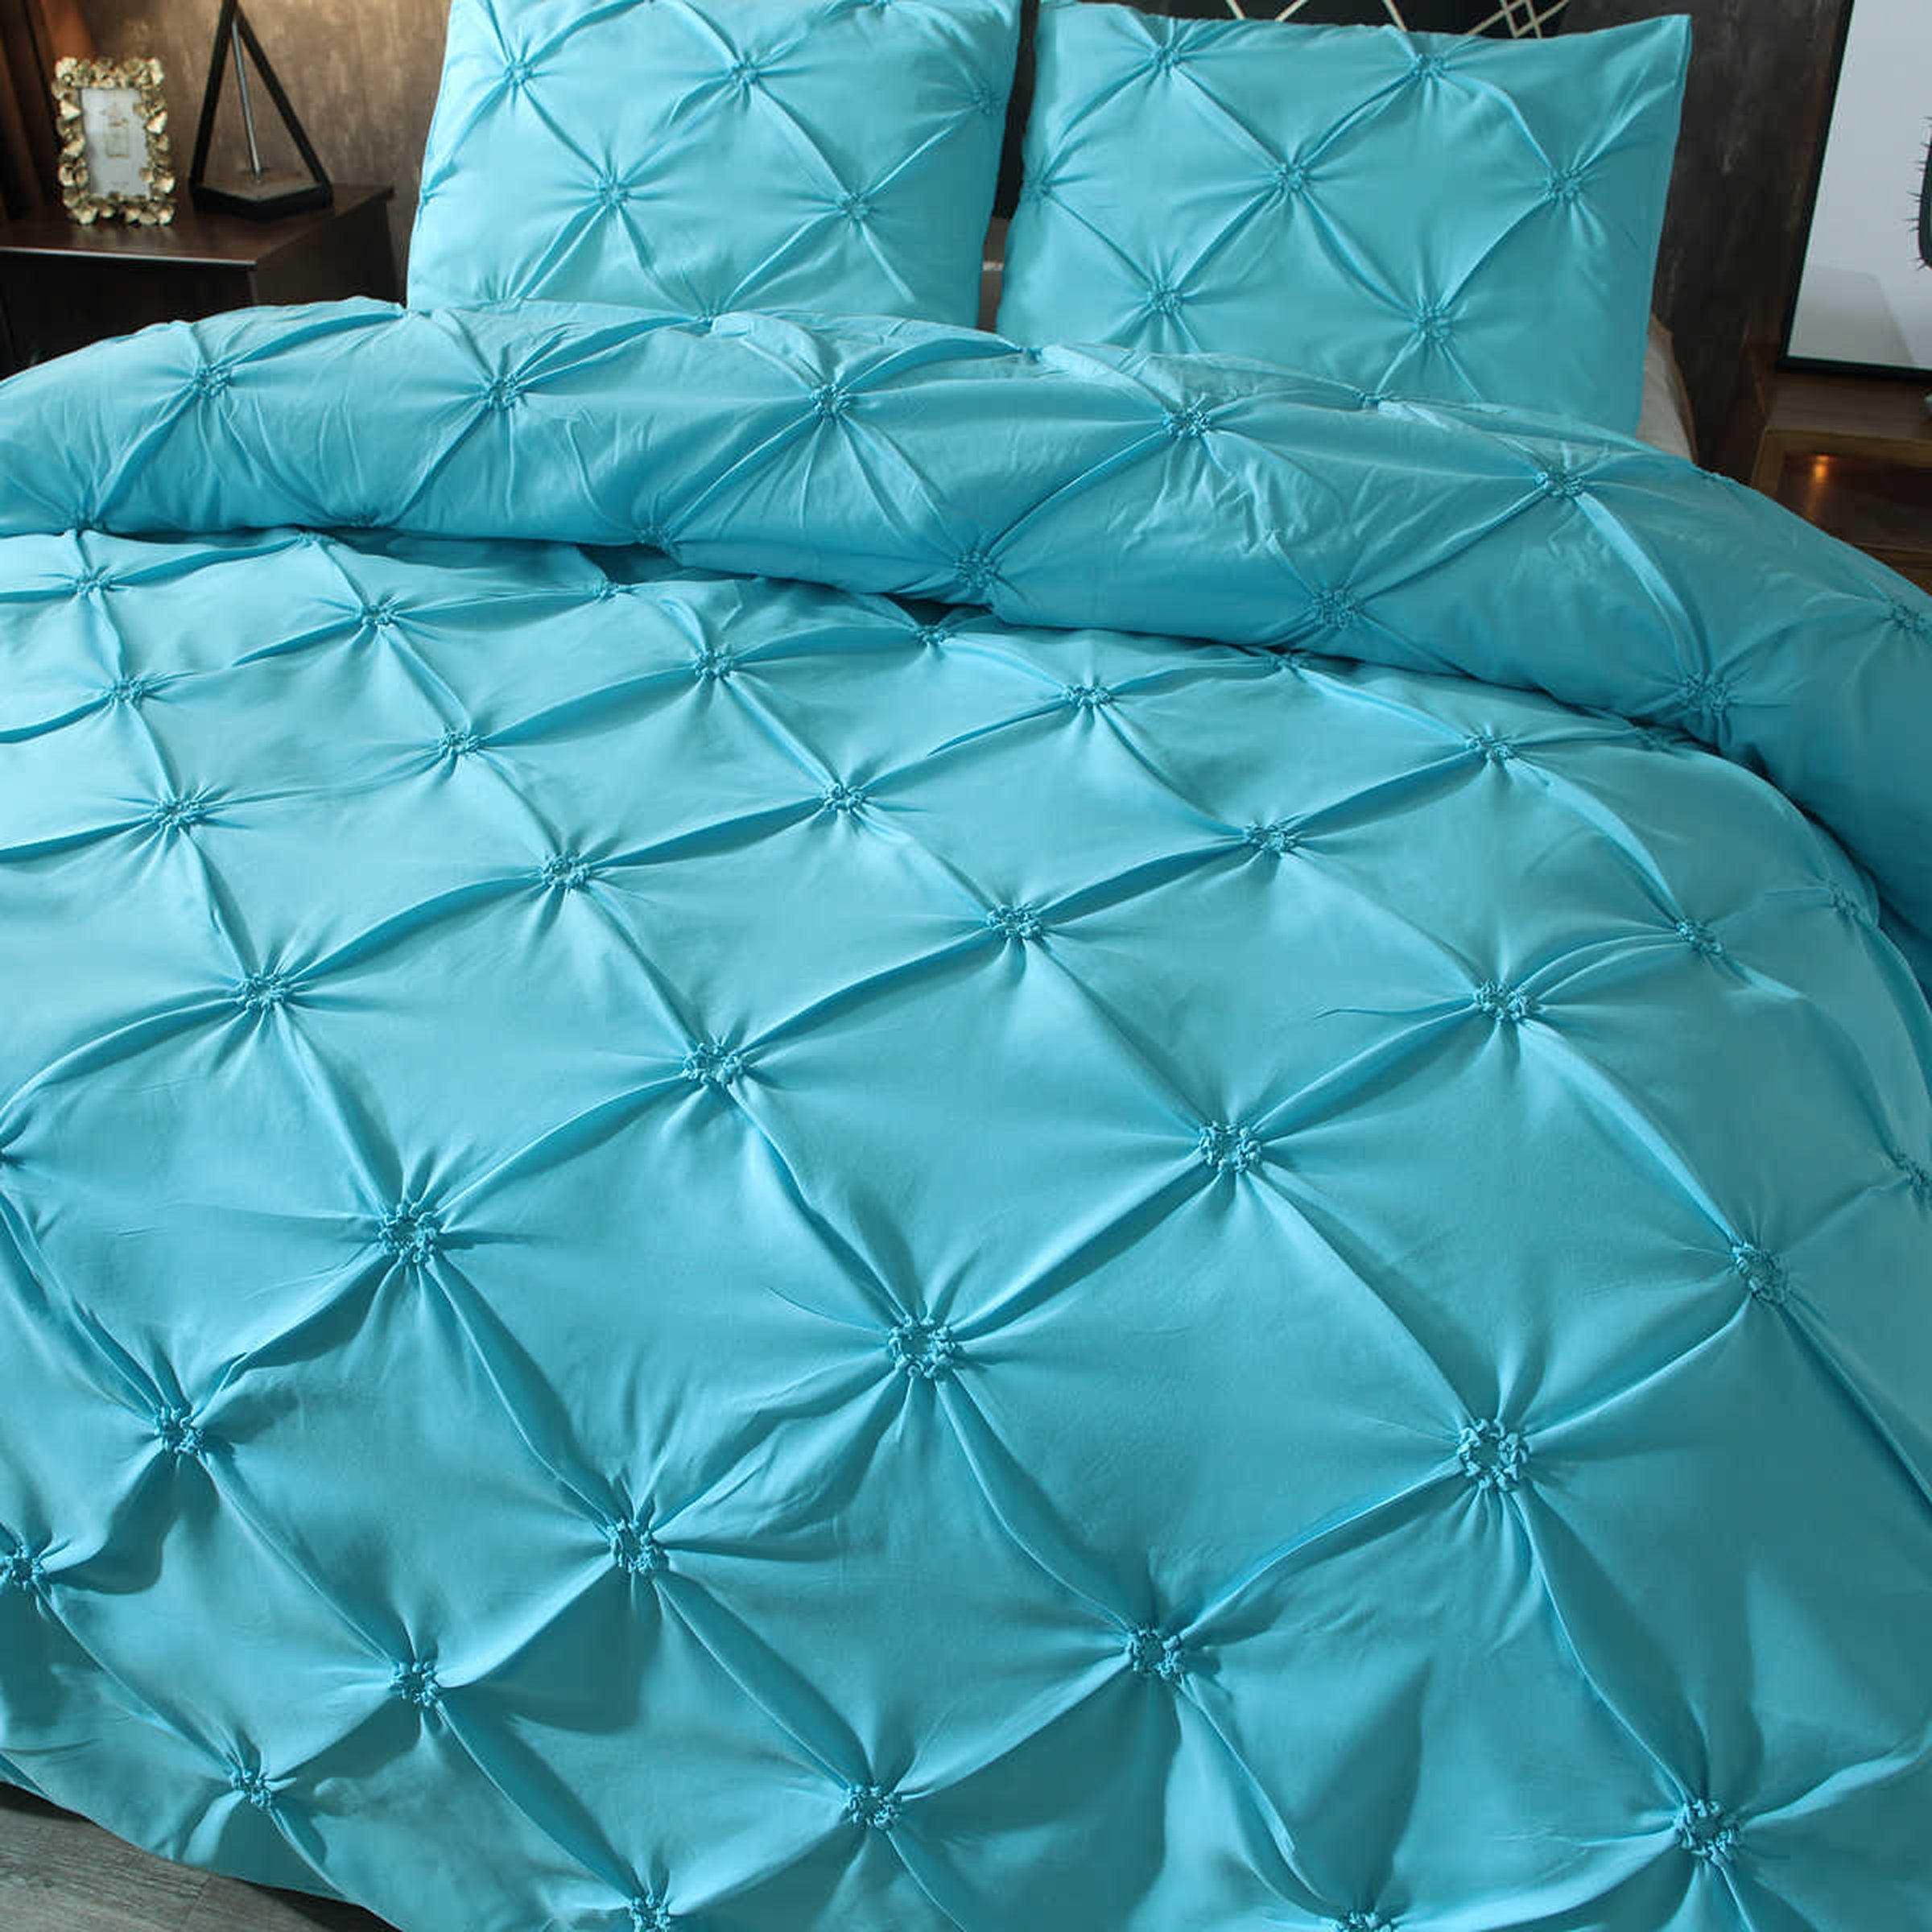 daintyduvet Aquamarine Cyan Blue Pintuck Bedding, Pinch Pleat Duvet Cover Set, Shabby Chic Bedding, Tufted Bed Cover, Luxury Aesthetic Duvet, Boho Bed